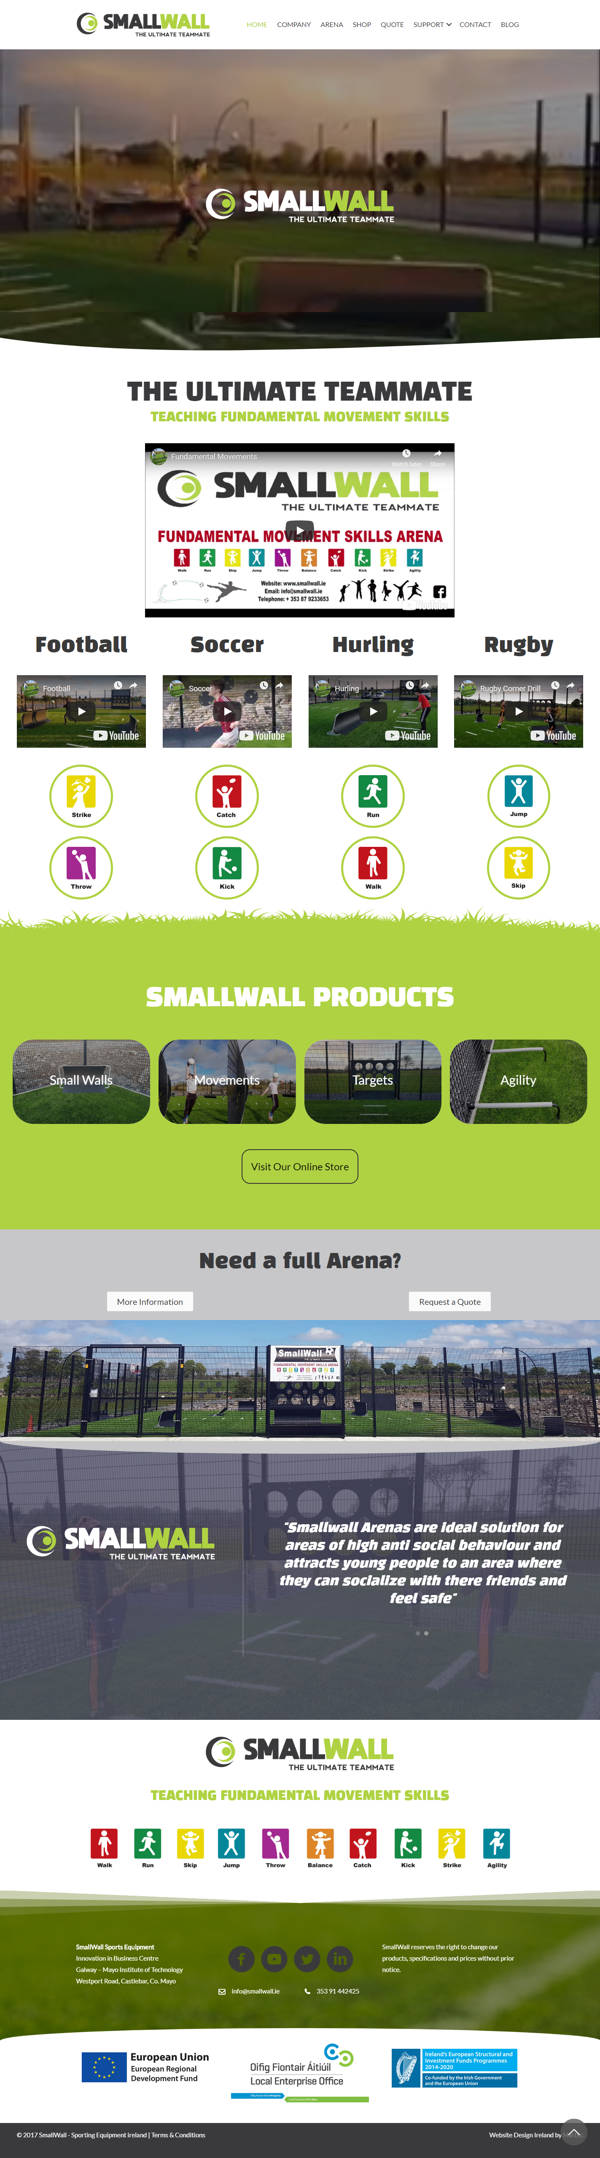 SmallWall – Sporting Equipment ireland